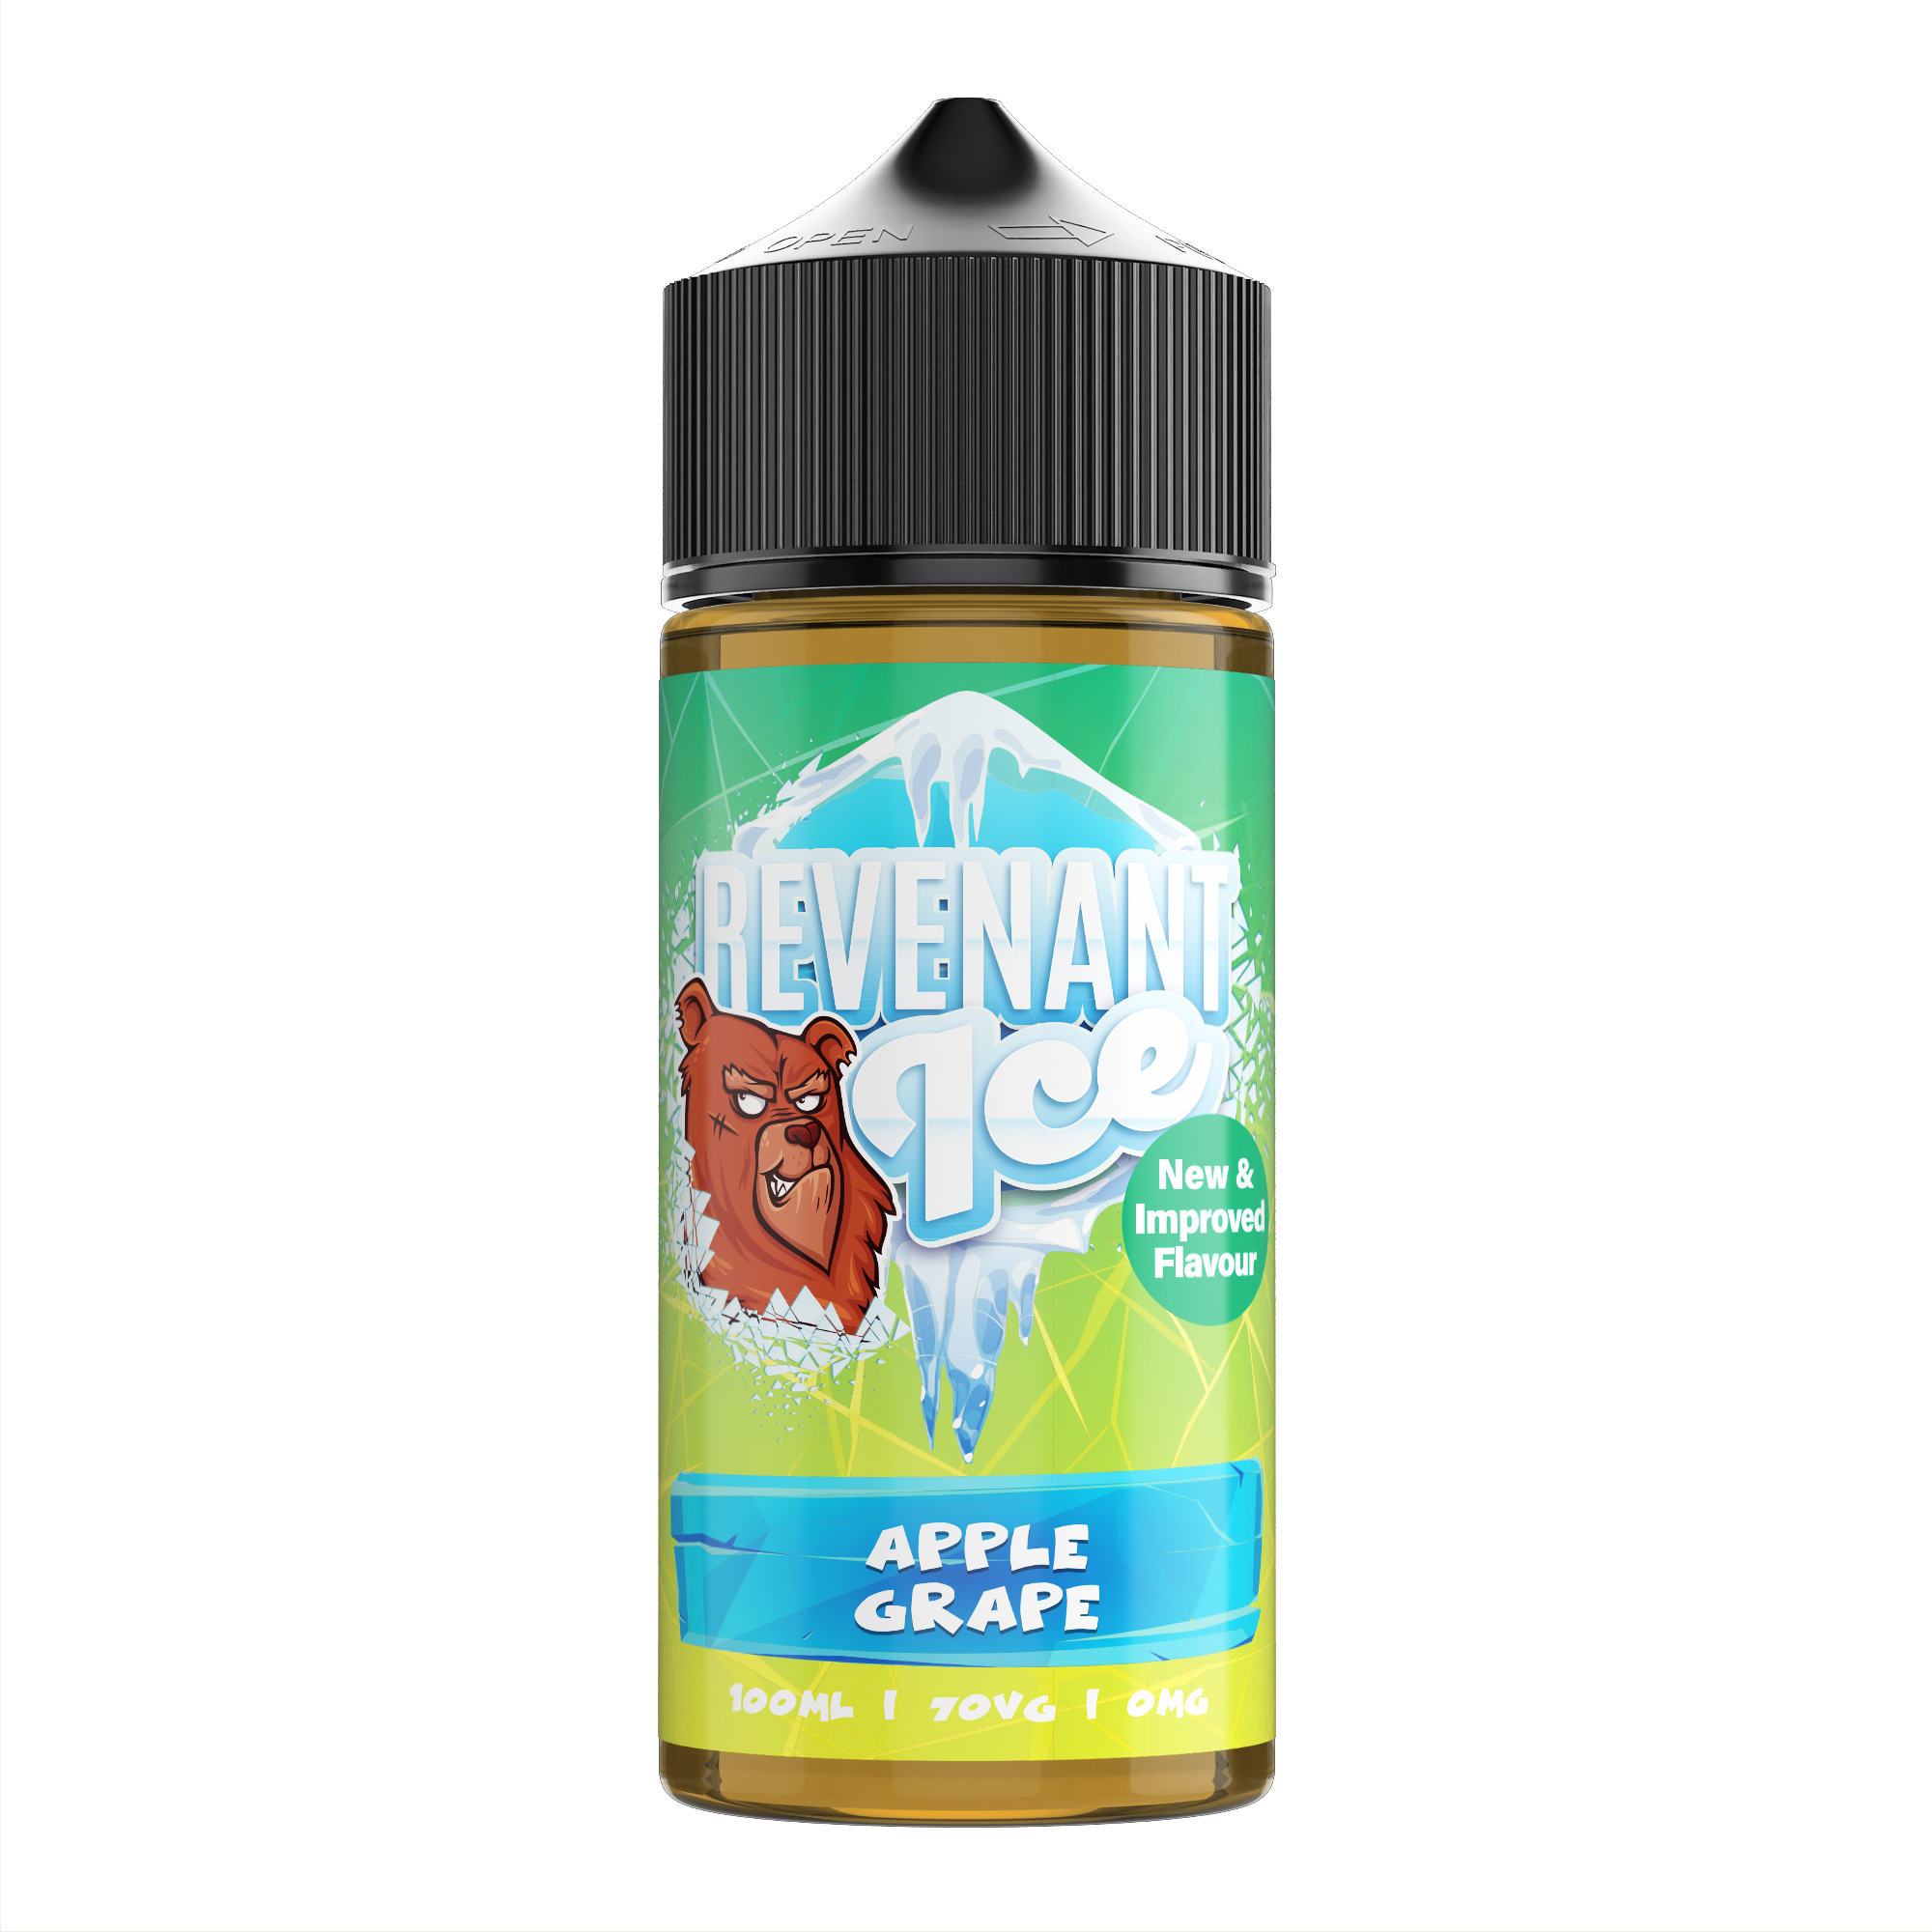 Apple & Grape Ice 100ml Shortfill by Revenant Ice